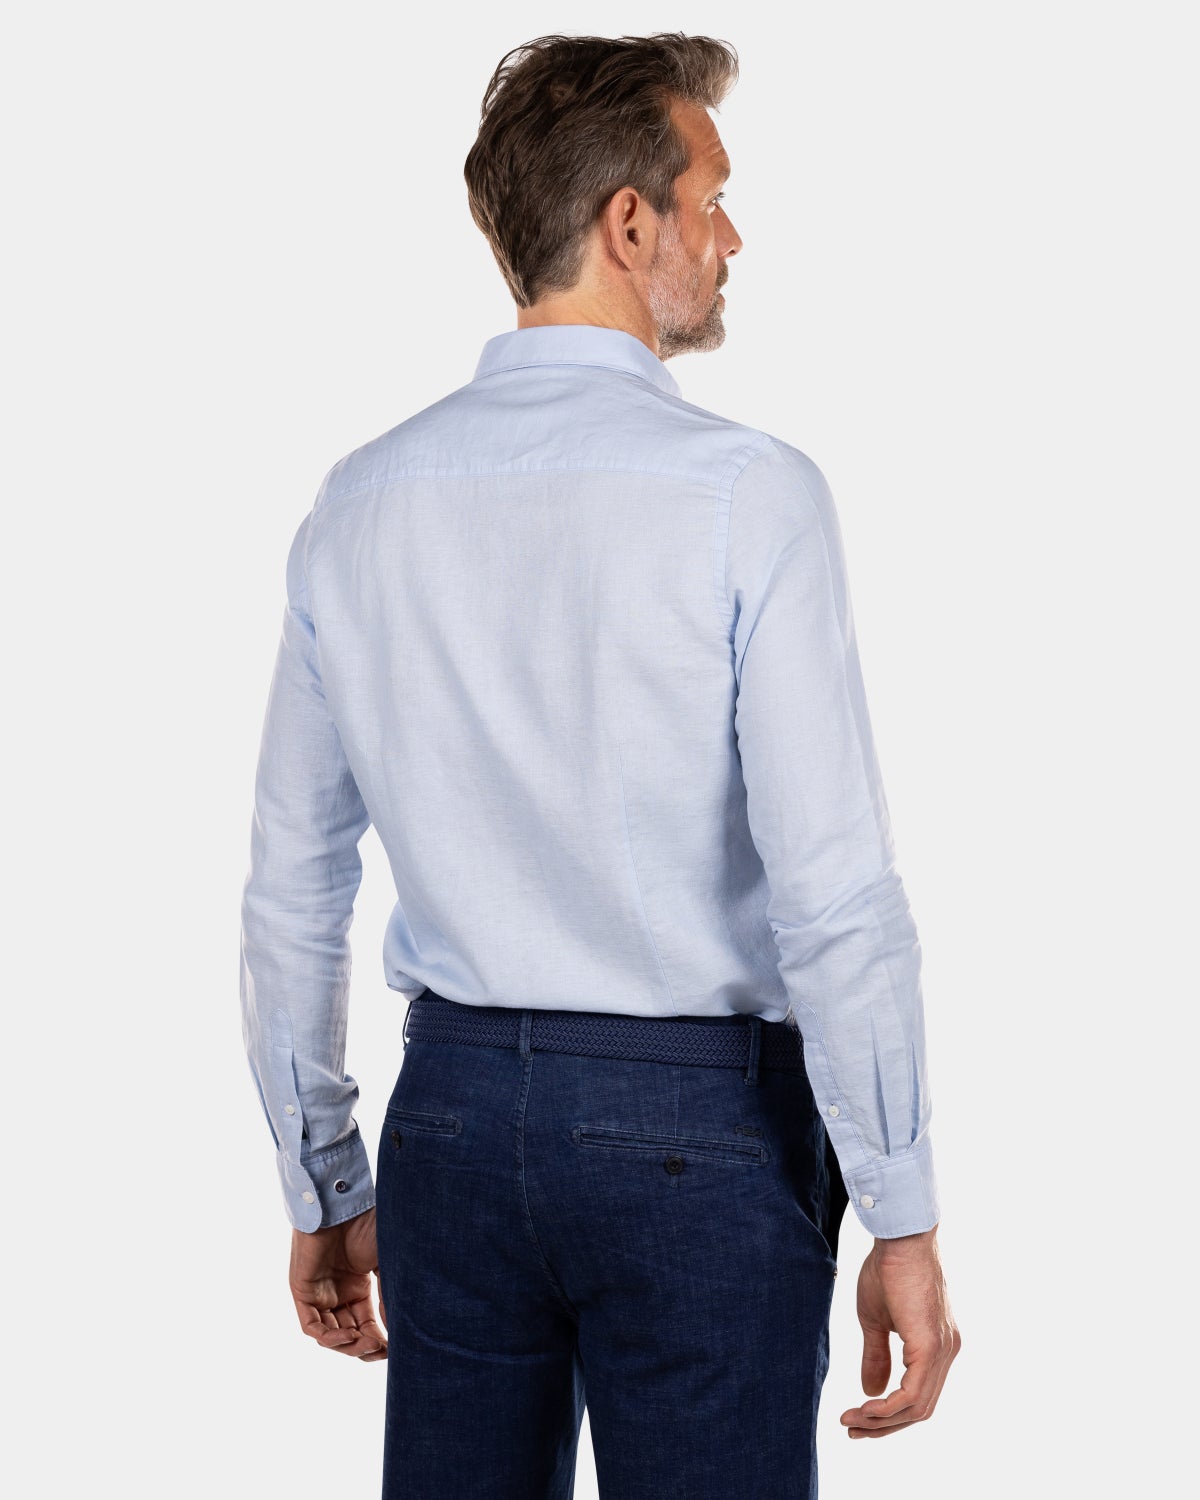 Plain linen shirt in many colors - Rhythm Blue